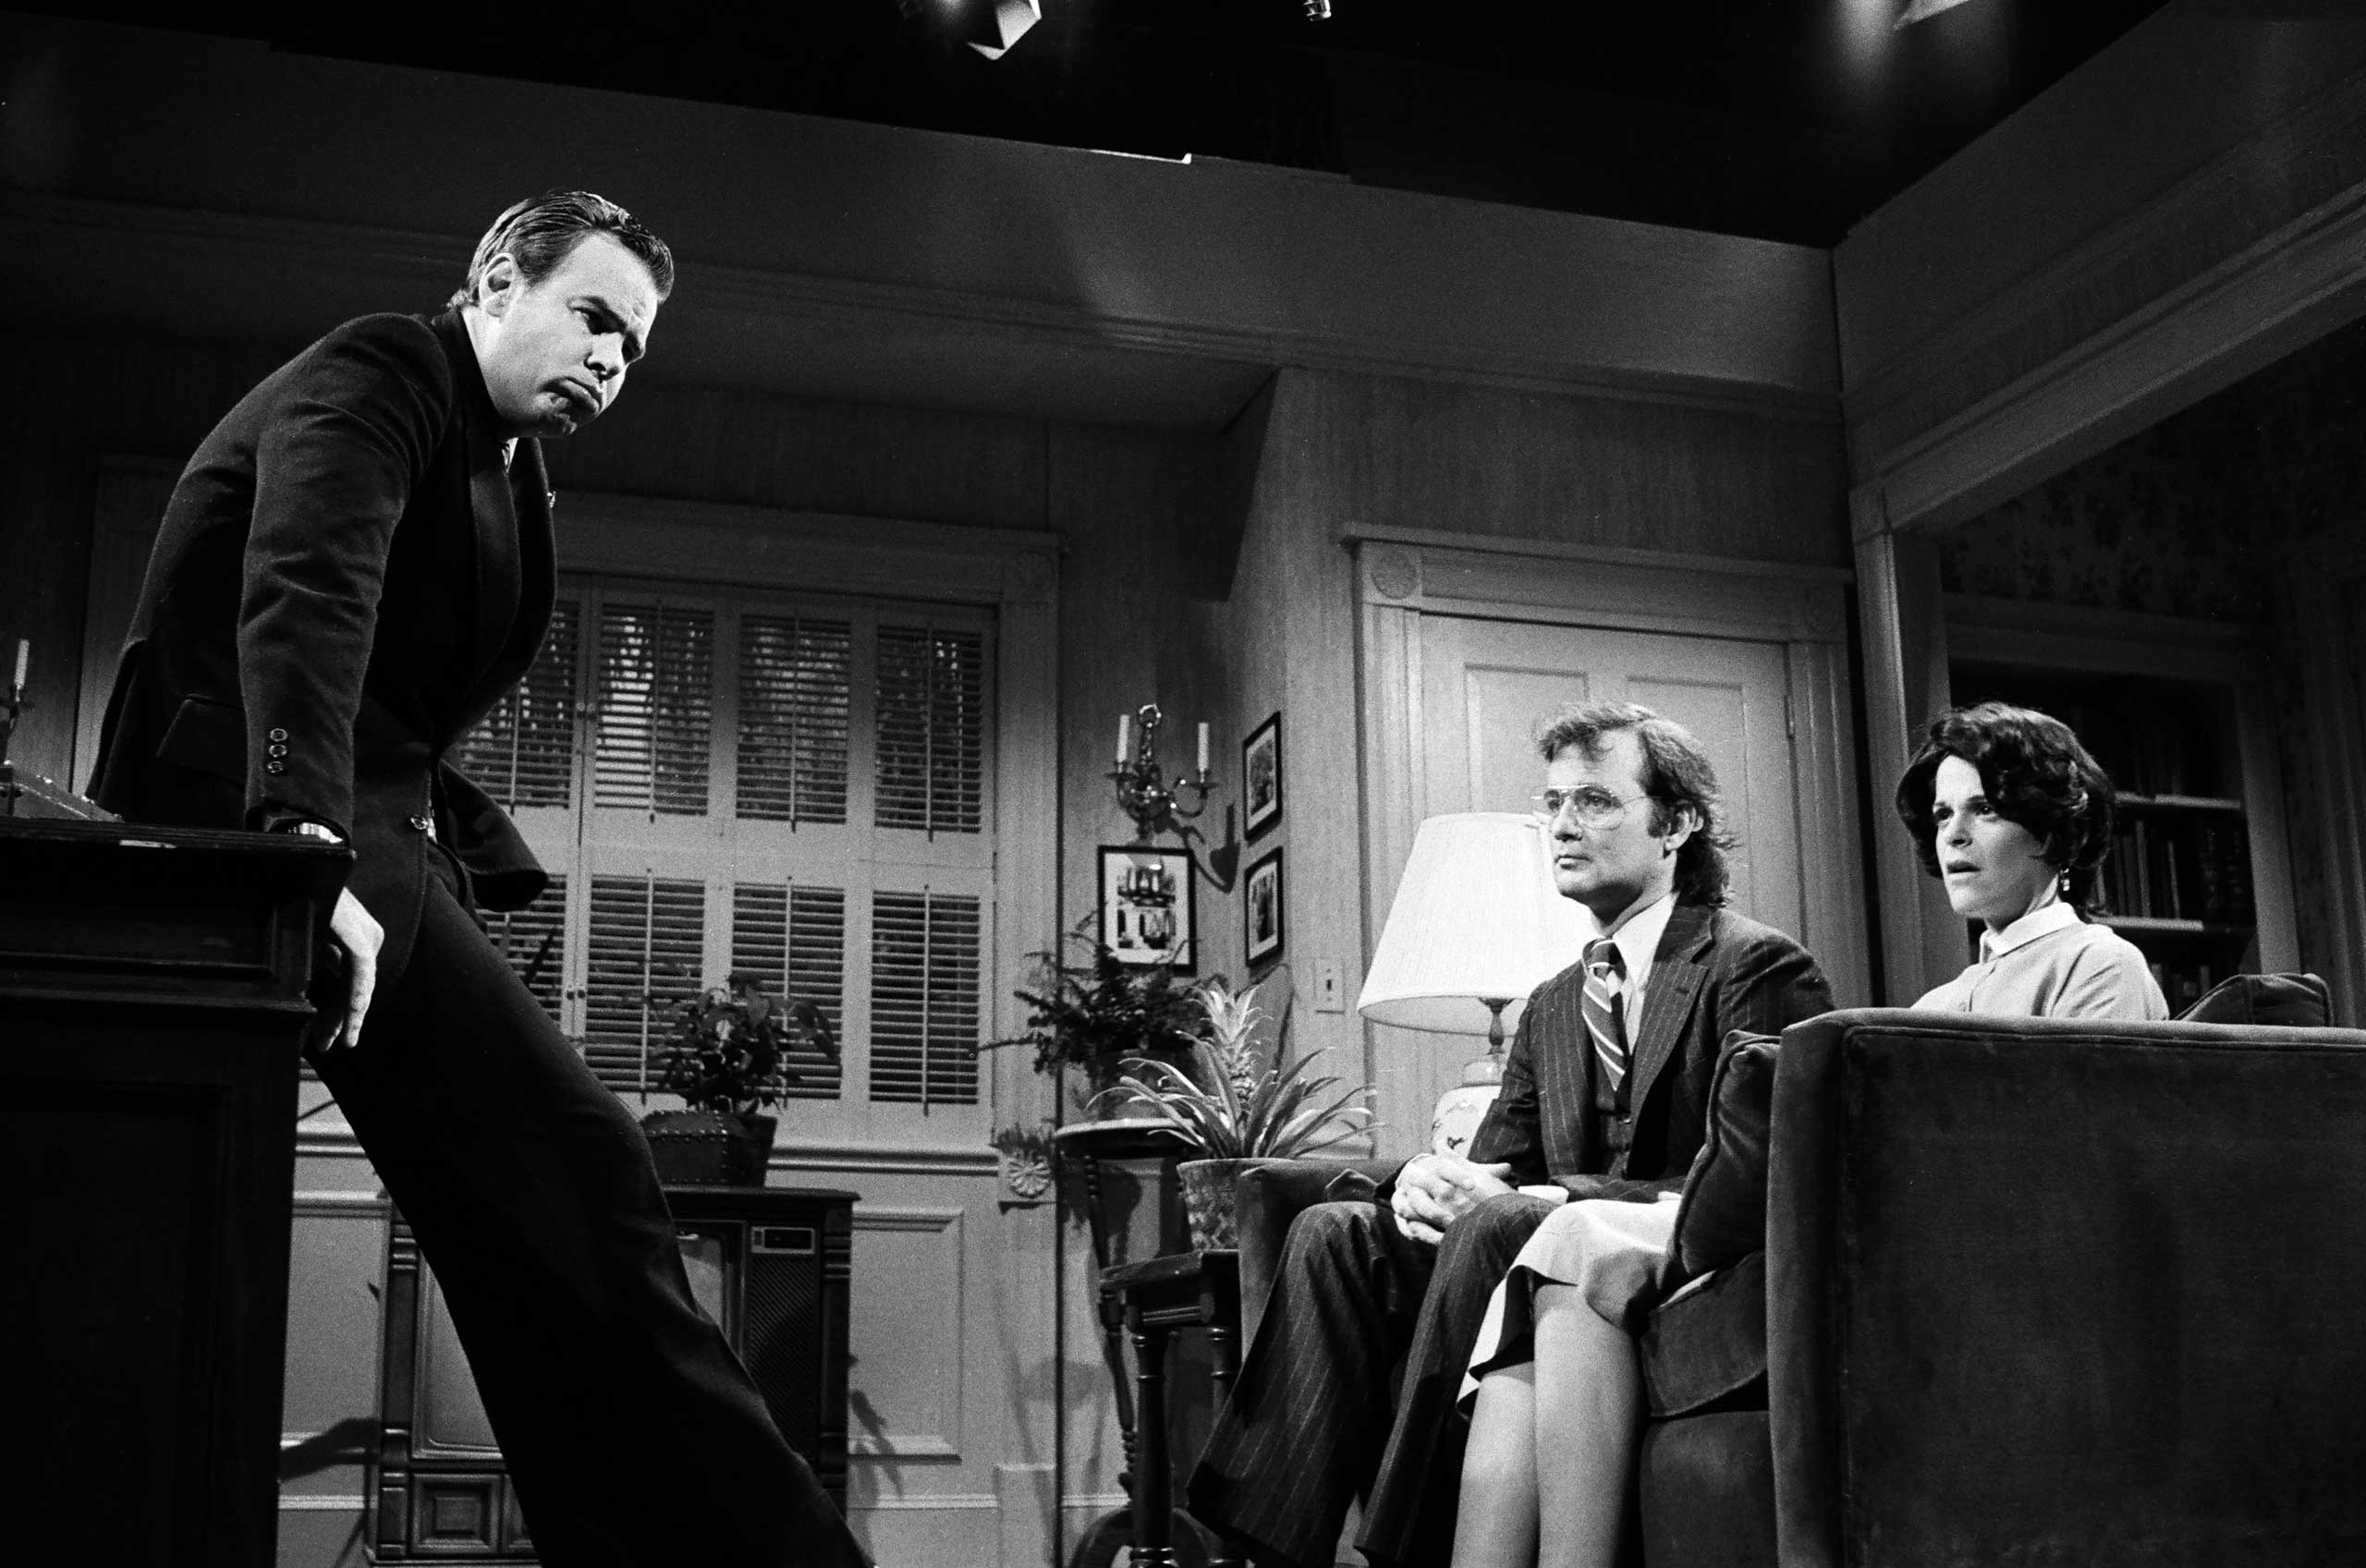 From Left: Dan Aykroyd as Richard Nixon, Bill Murray as David Eisenhower, and Gilda Radner as Julie Nixon during the 'Blind Ambition' skit on May 26, 1979.